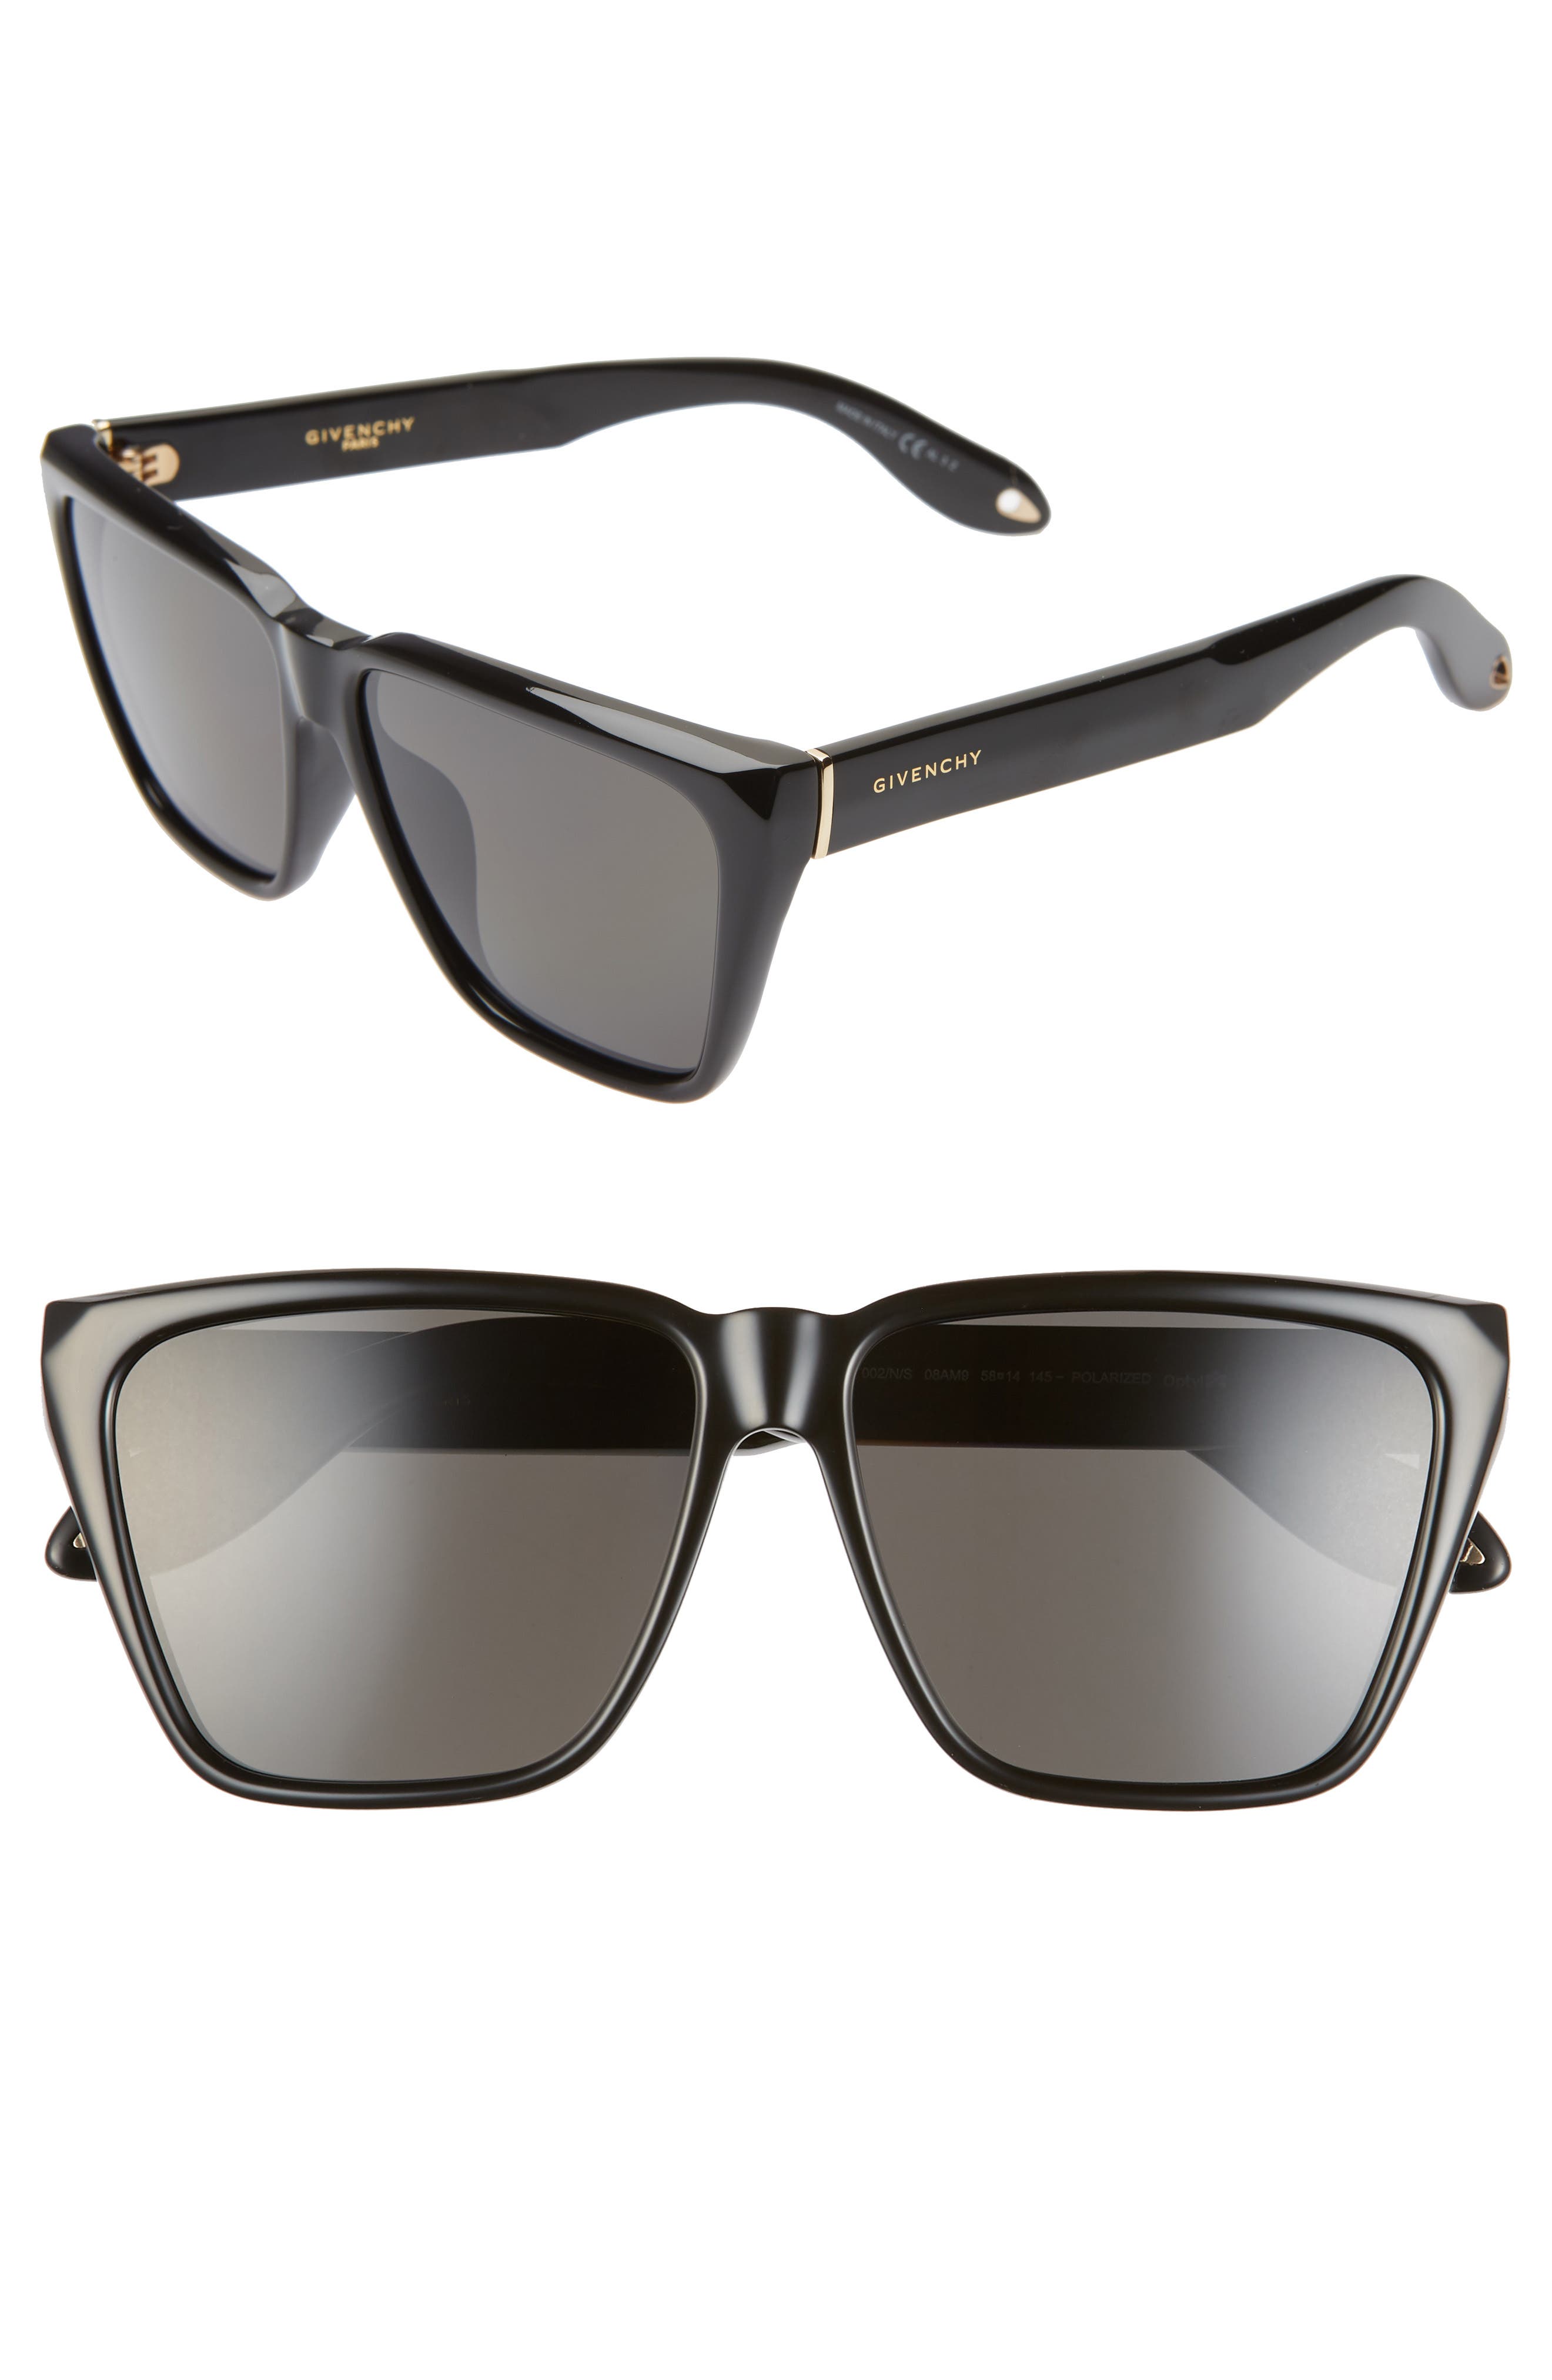 givenchy gv7002 sunglasses